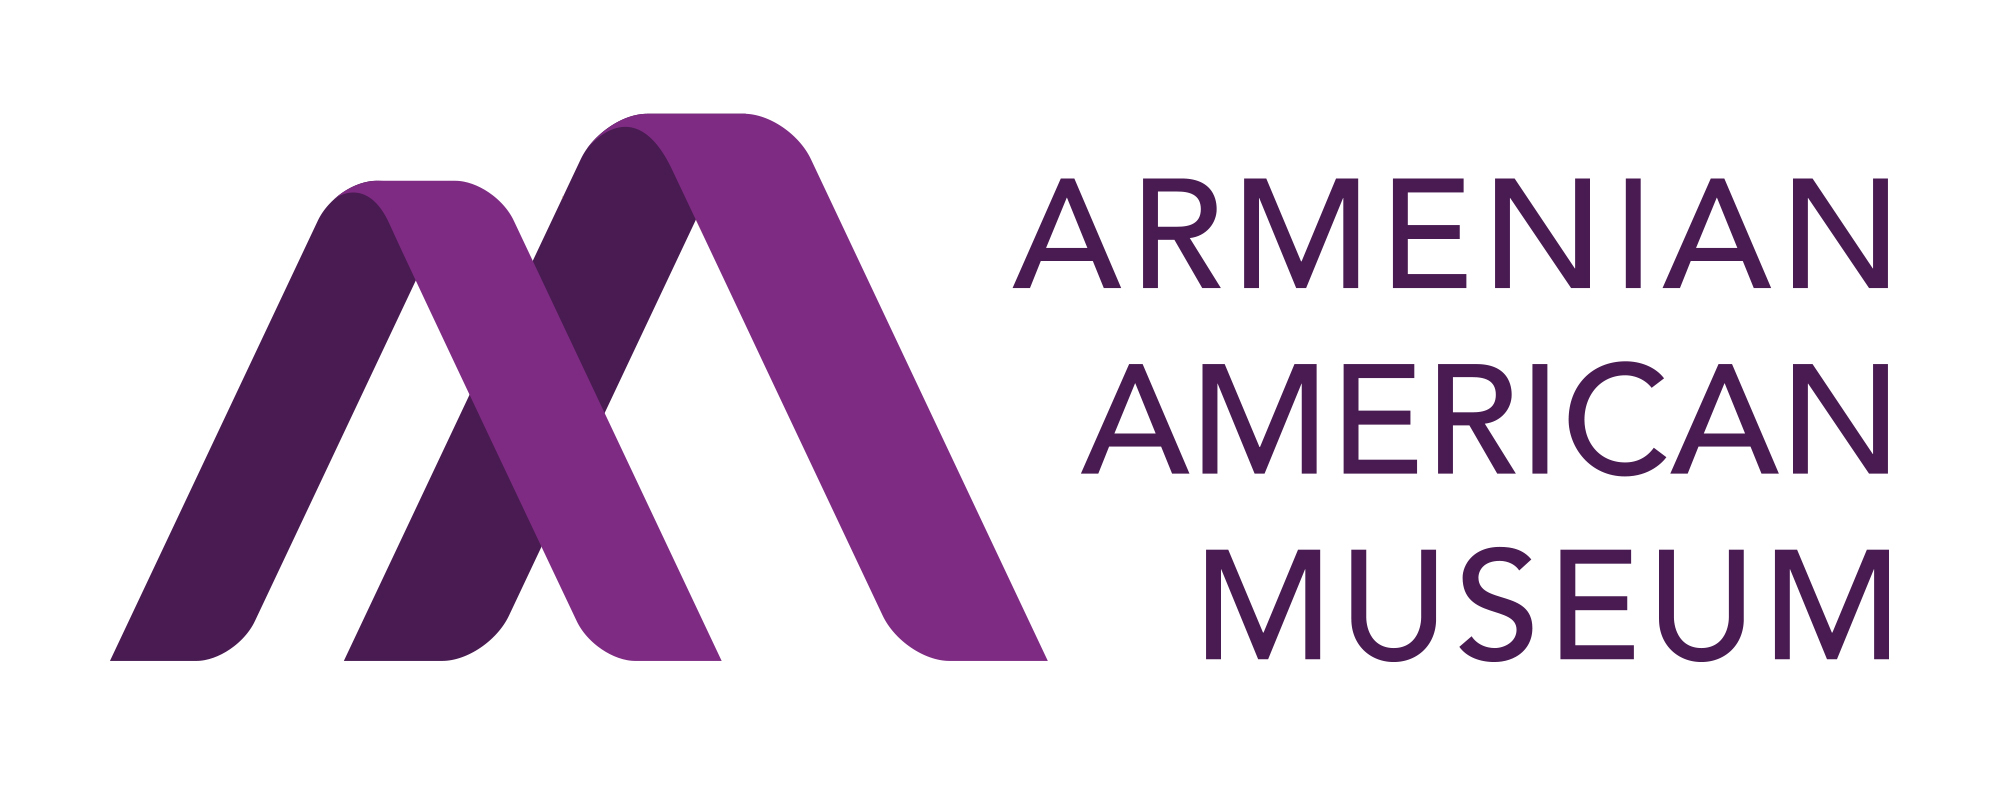 Armenian American Museum Logo Social